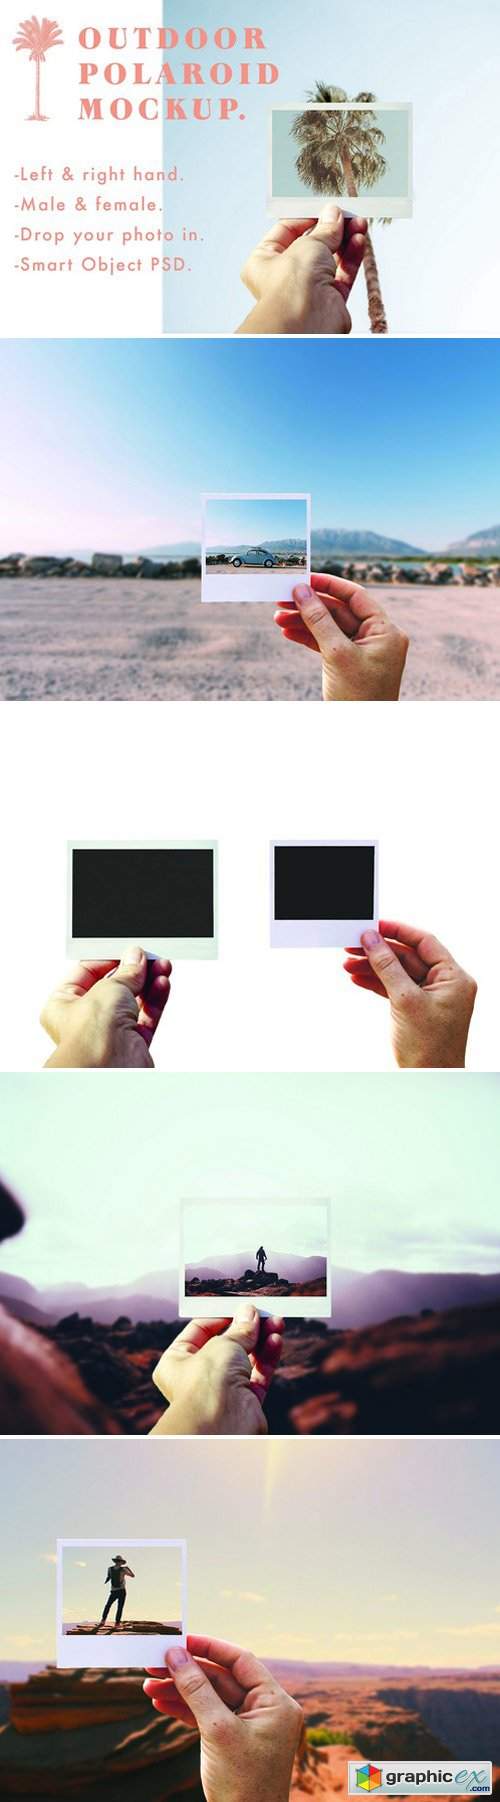 Outdoor Polaroid Mockup x 2